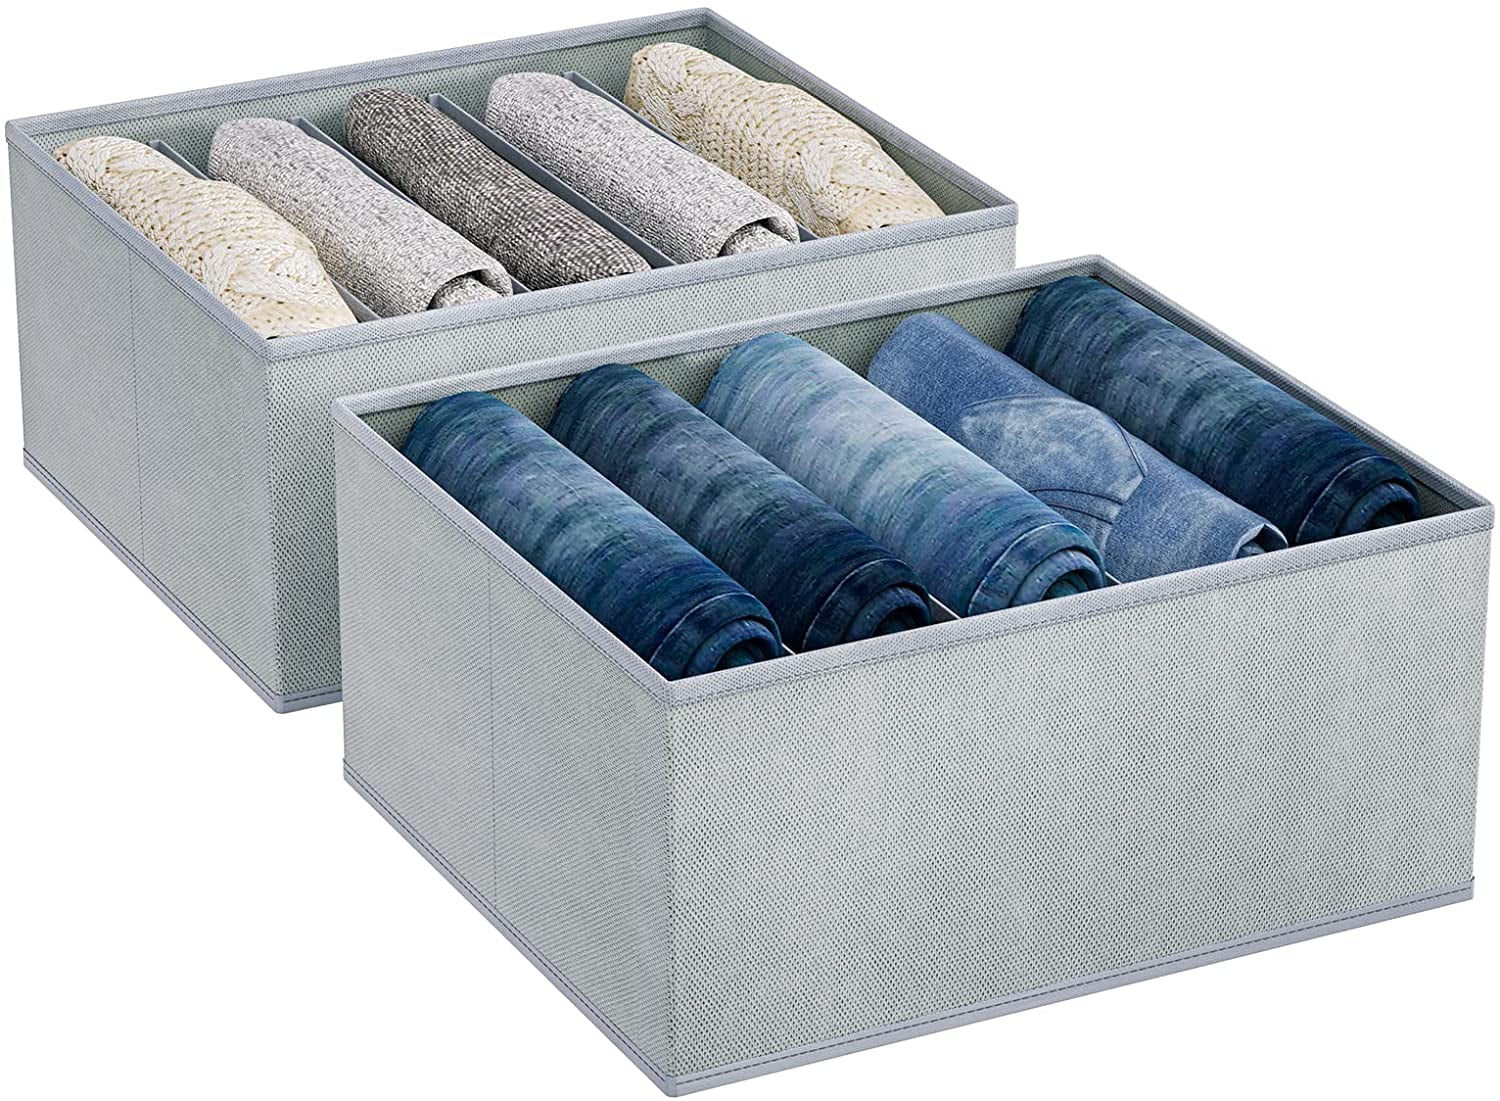 Negj Mesh Clothes Storage Box Trouser Compartment Storage Box Drawer Compartment Bag Clear Bins for Closet Organization Bins Storage 32 Hi Clear